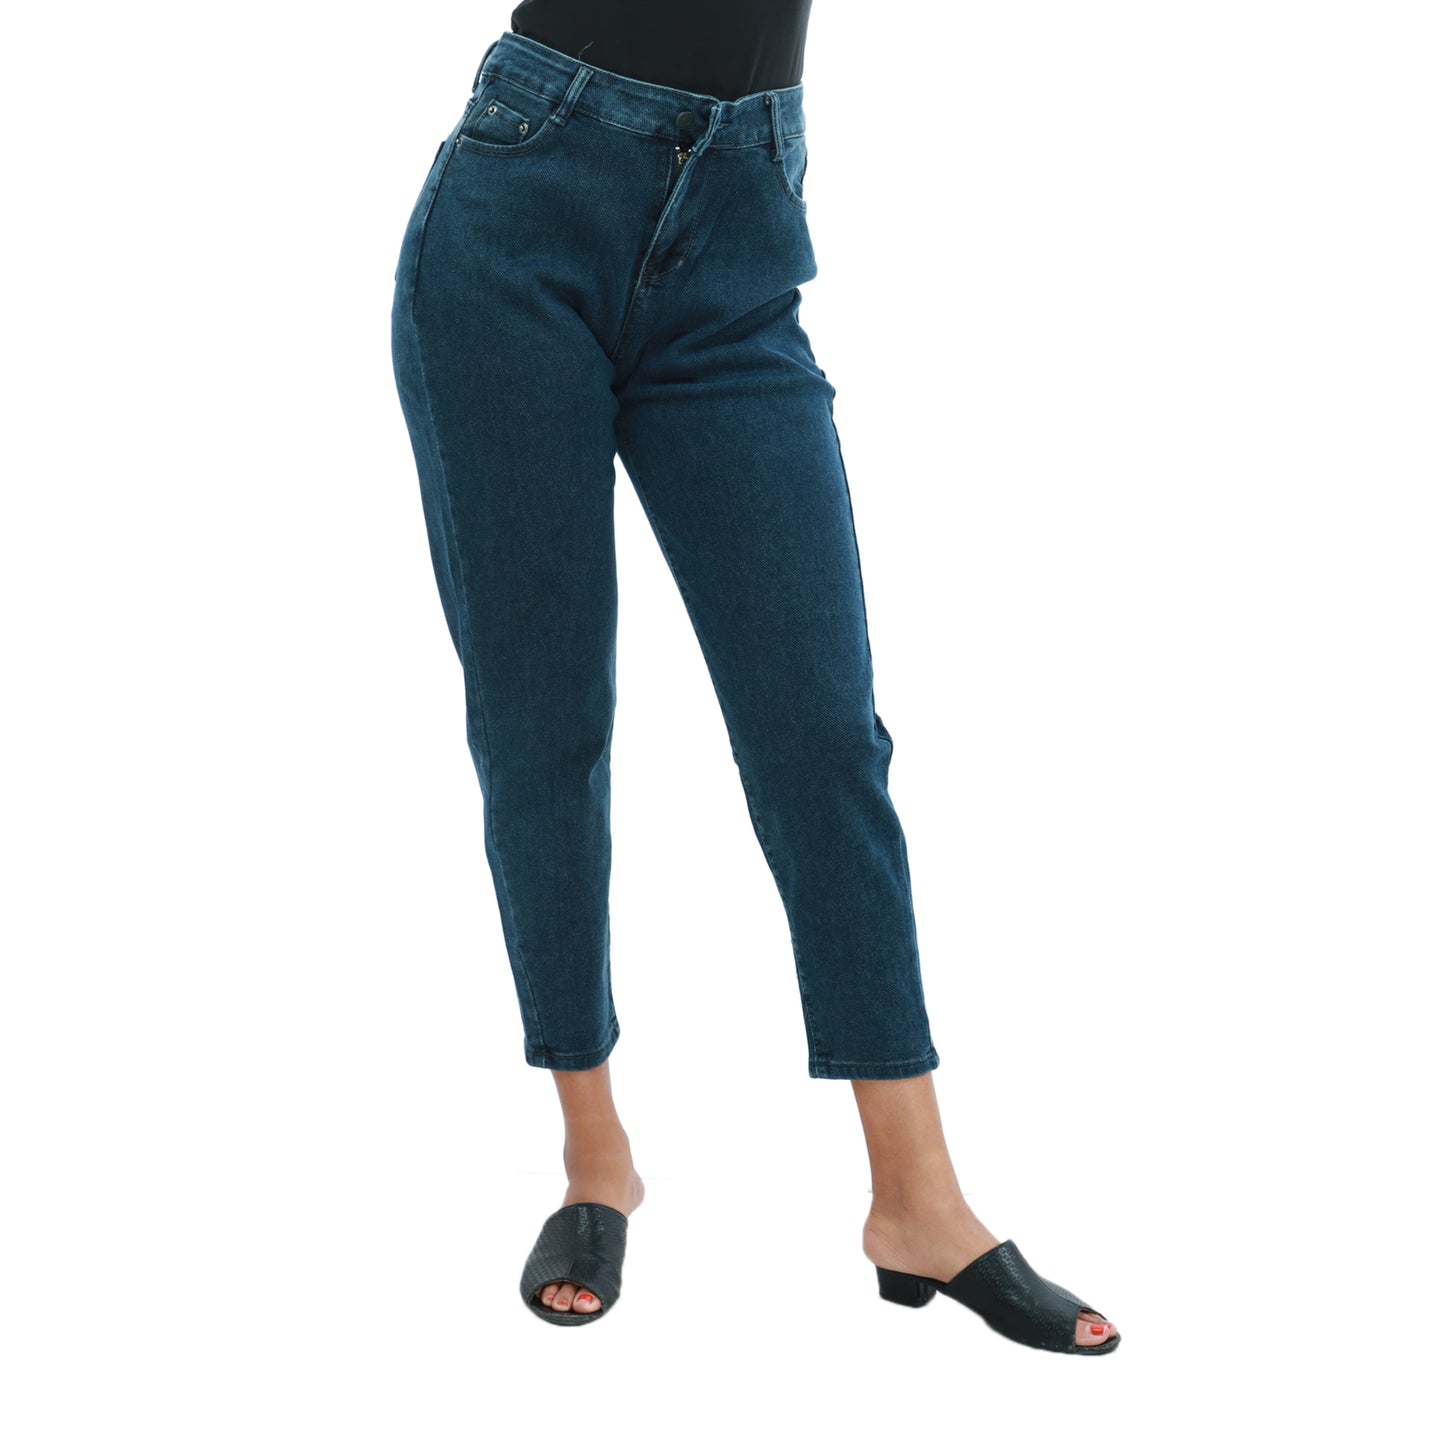 Blue Skinny Slim Jeans Pant (P-1101)